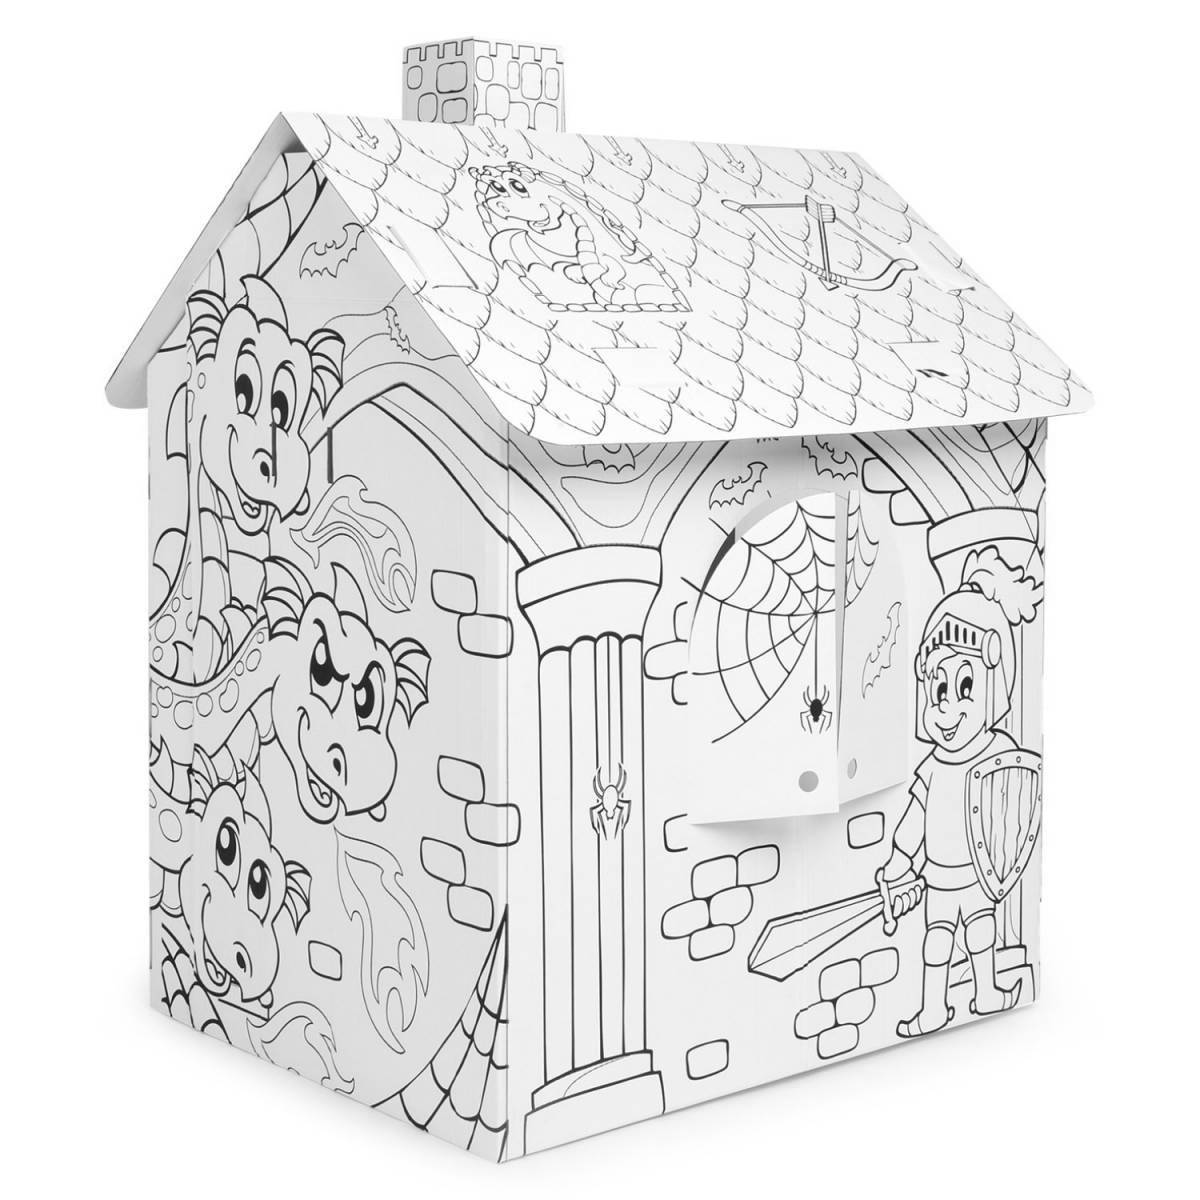 Впечатляющая раскраска картонного домика для младенцев